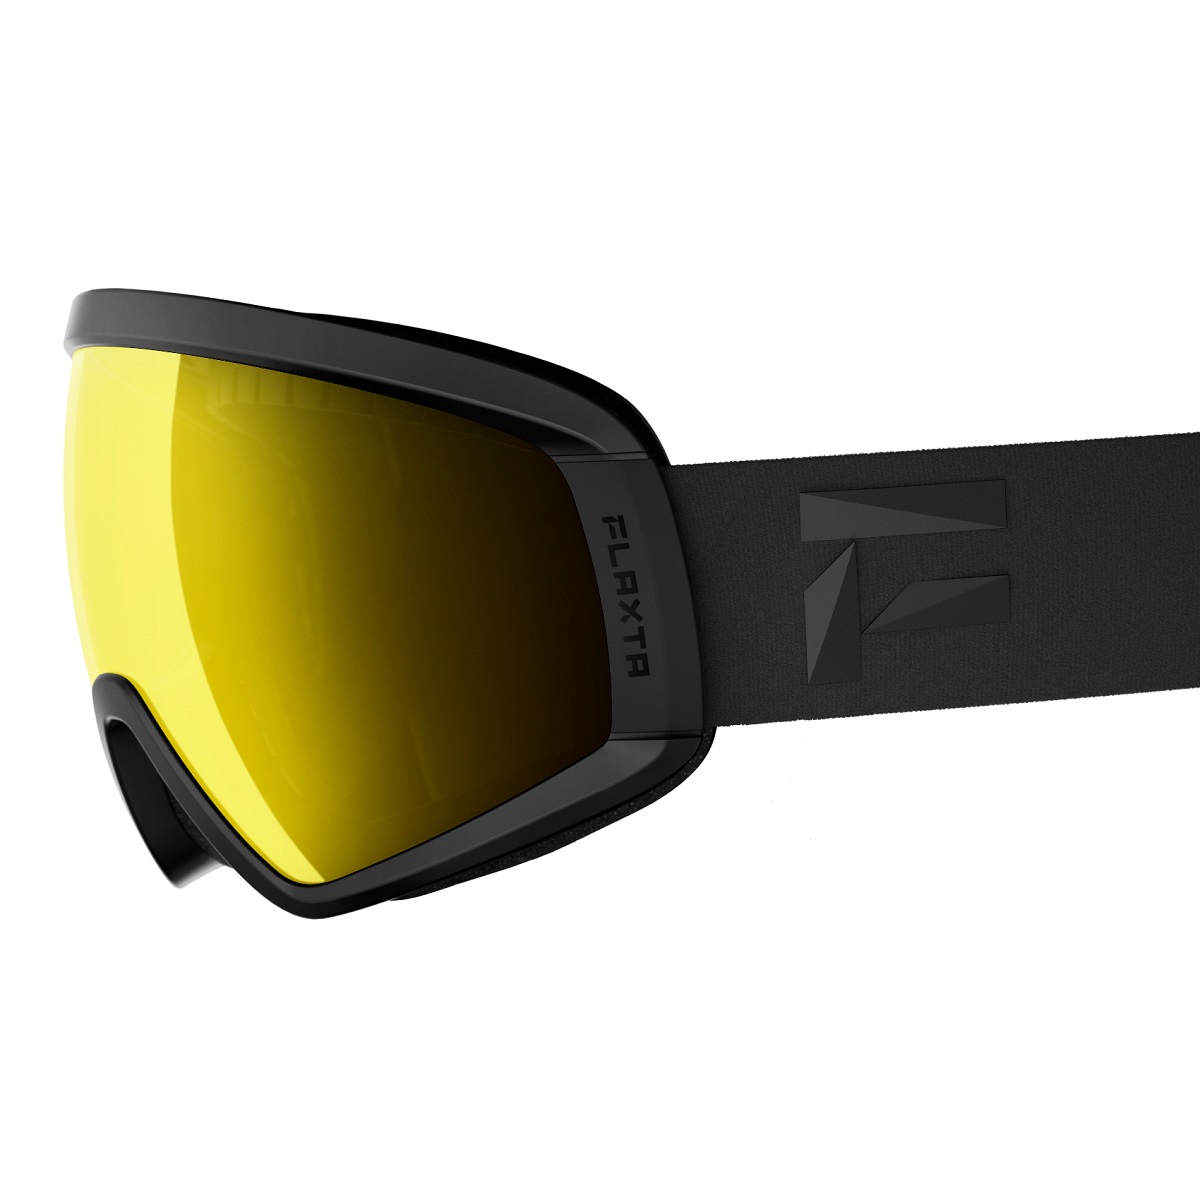 Skijaška naočale Flaxta Continuous crne boje